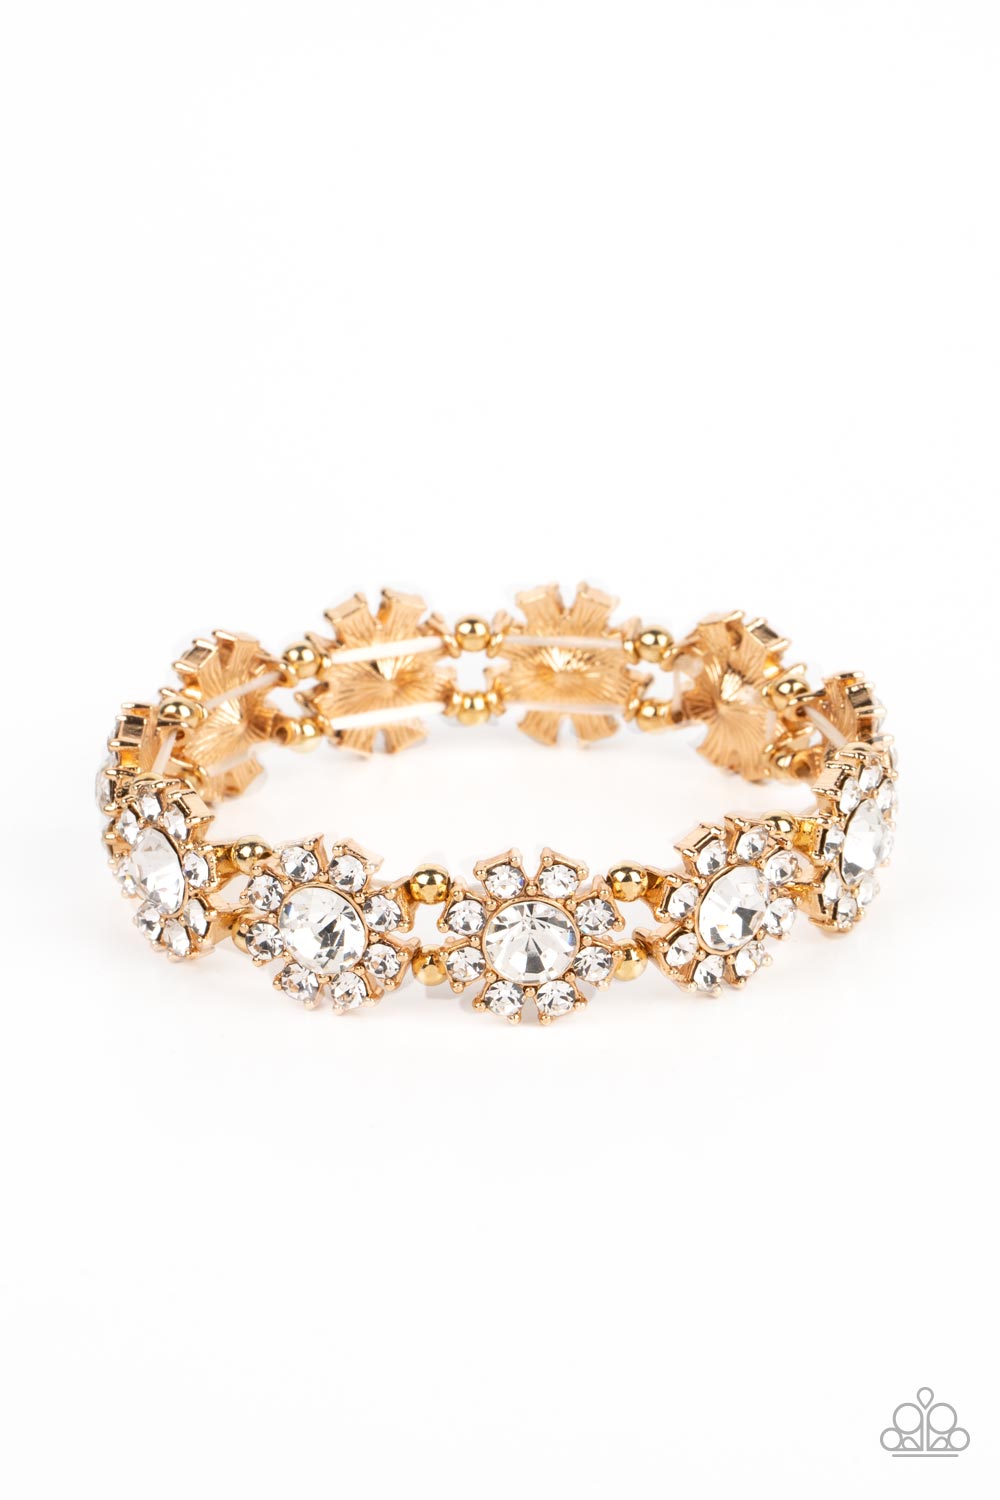 Premium Perennial - Gold Beads, Rhinestone-Dotted Petals, & Oversized White Rhinestone Center Paparazzi Stretch Bracelet